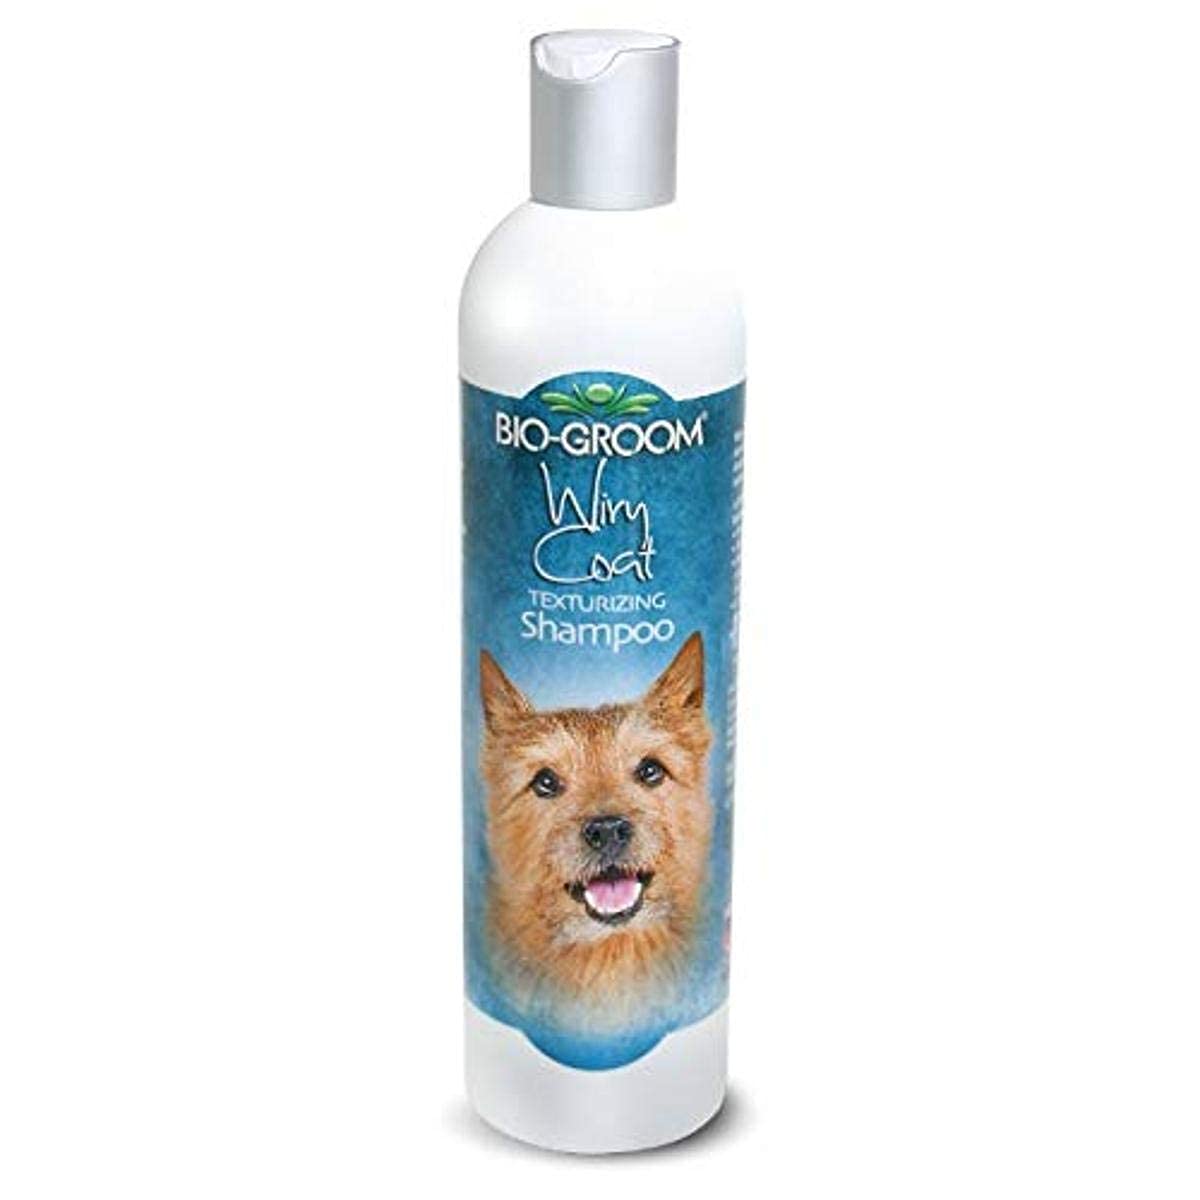 Bio-Groom Wiry Coat Texturizing Shampoo, 355 ml